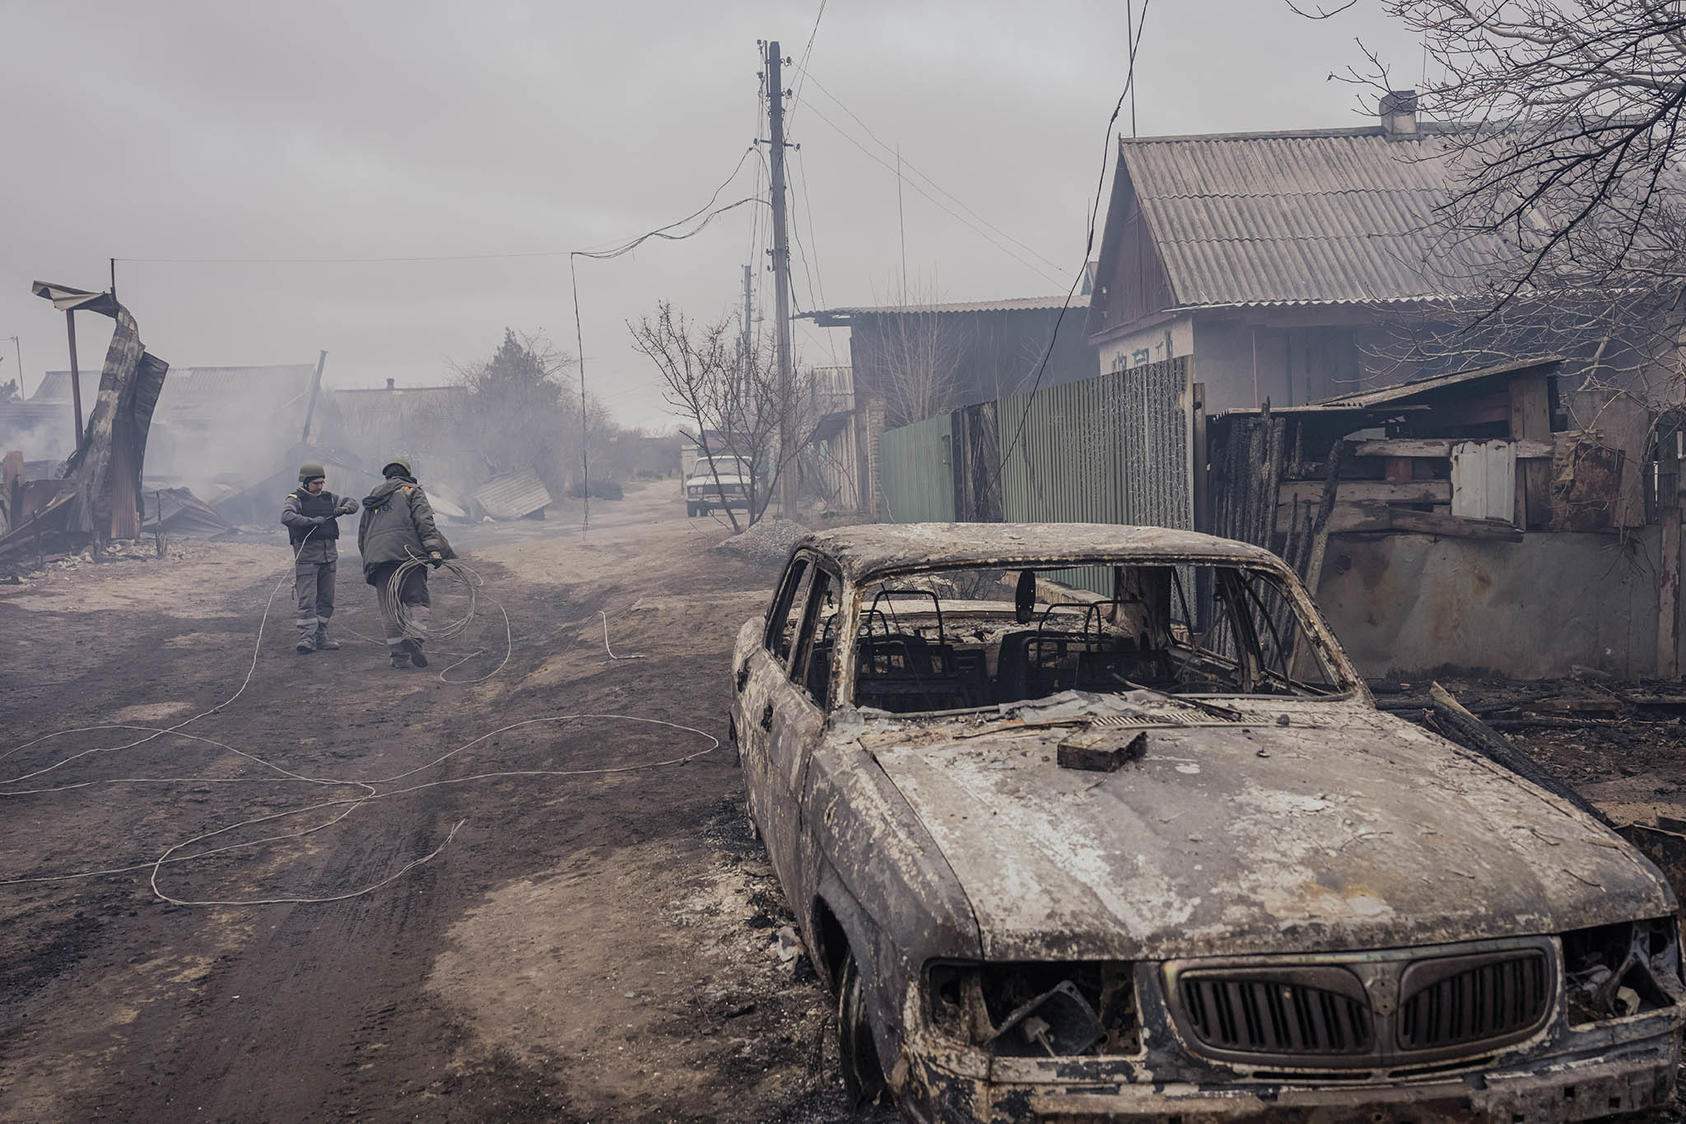 The aftermath of a Russian rocket strike in Kostyantynivka, Ukraine, 10 miles west of Bakhmut, March 18, 2023. (Daniel Berehulak/The New York Times)